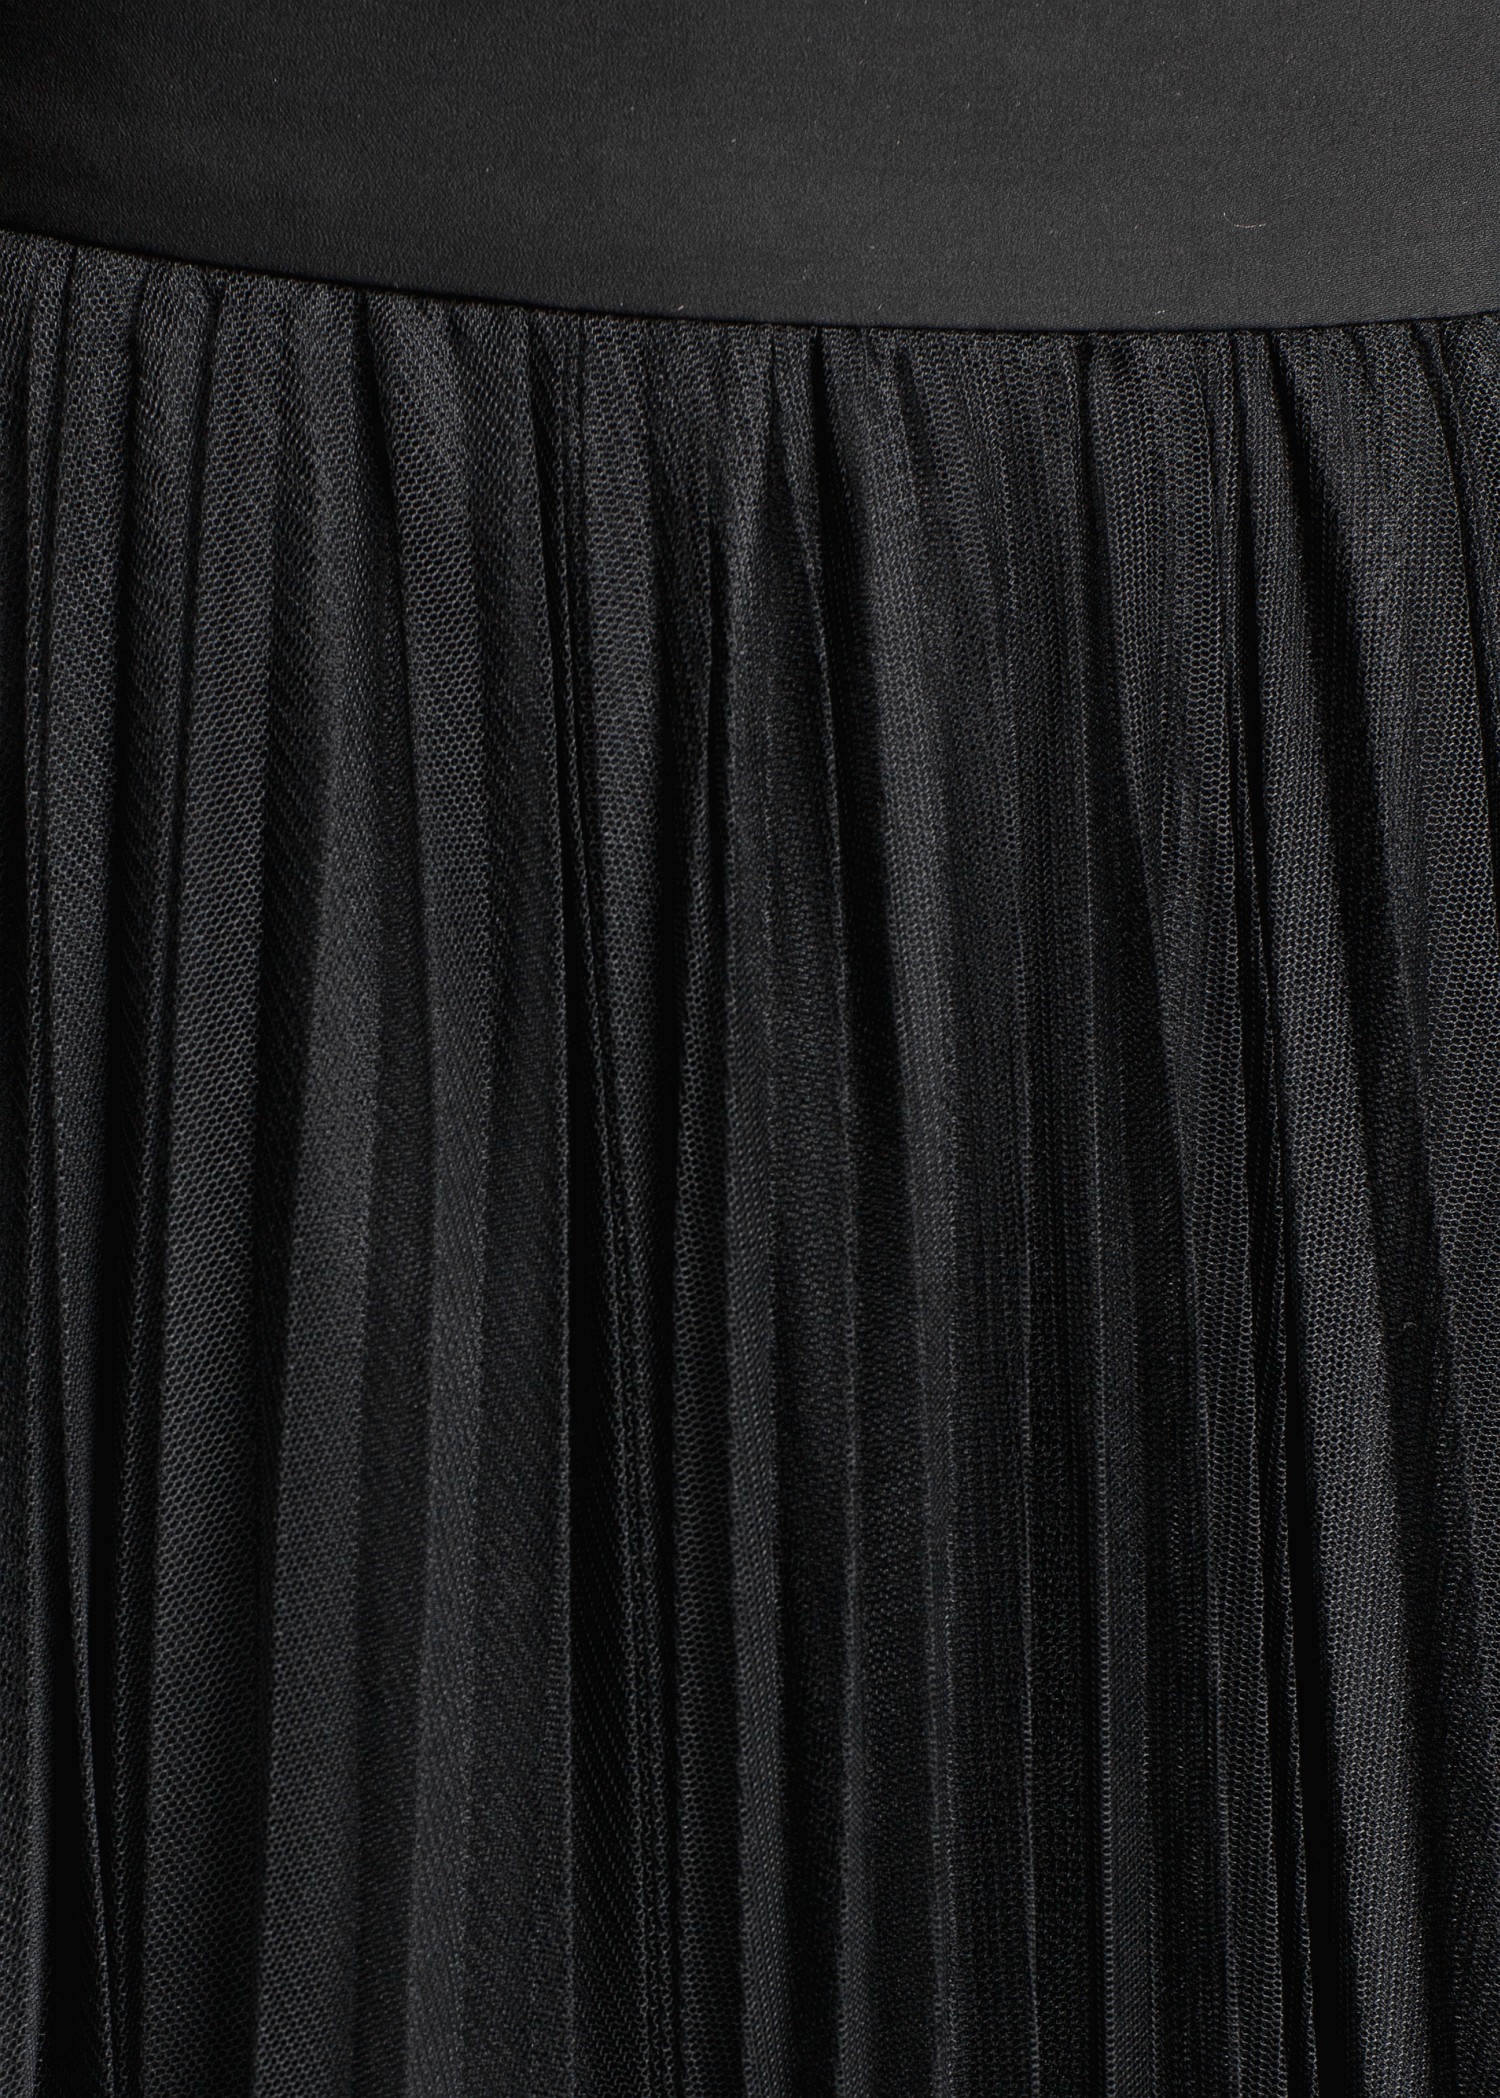 Lyst - Mango Pleated Tulle Long Skirt in Black